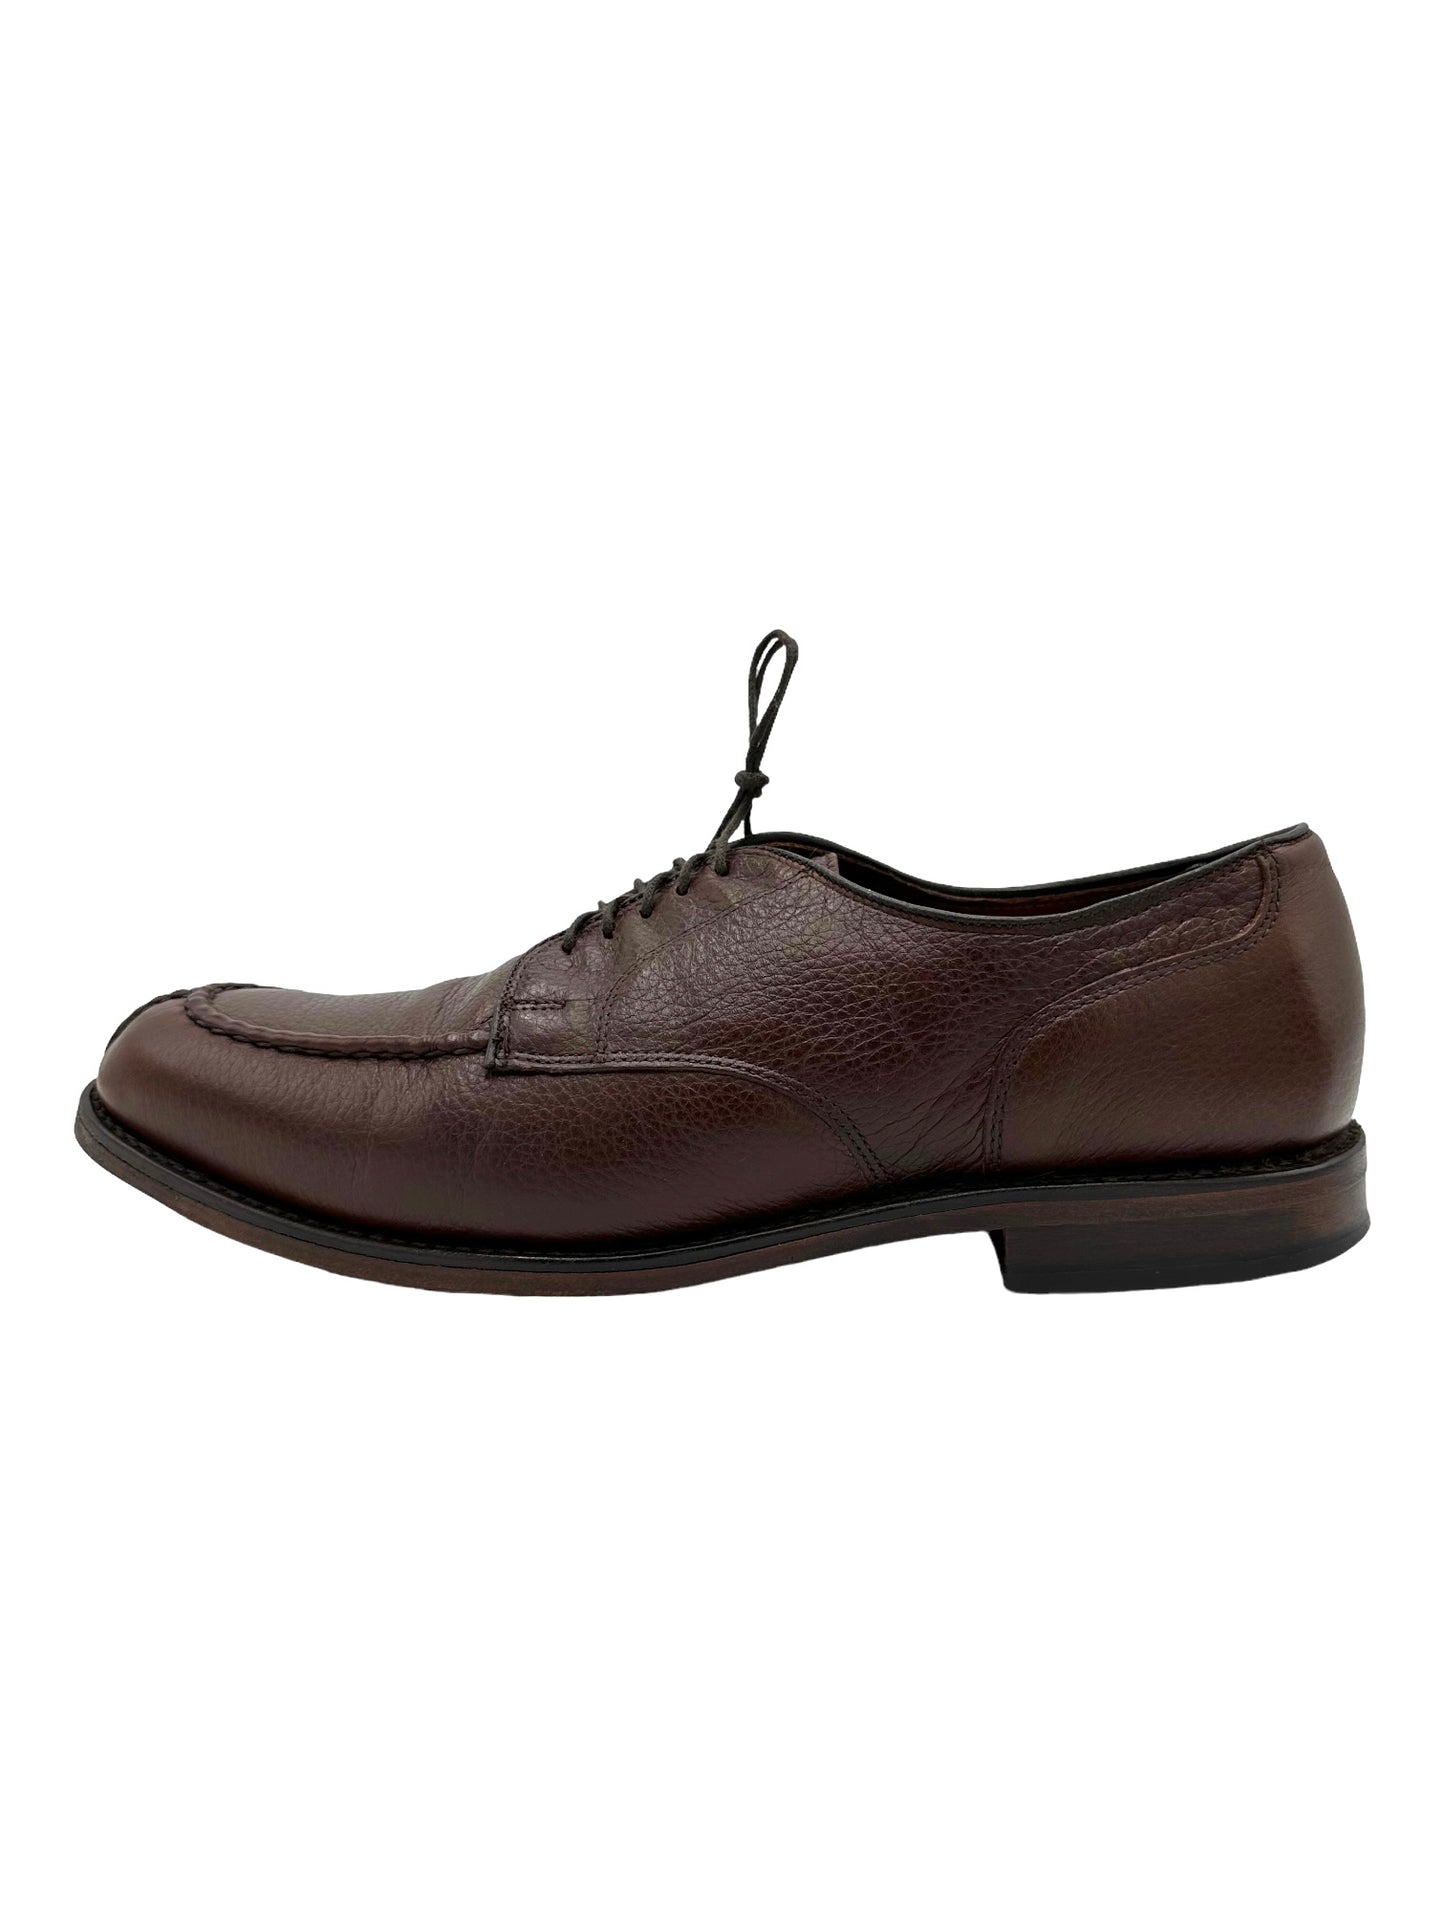 Allen Edmonds Brown Split Toe Oxford Shoes